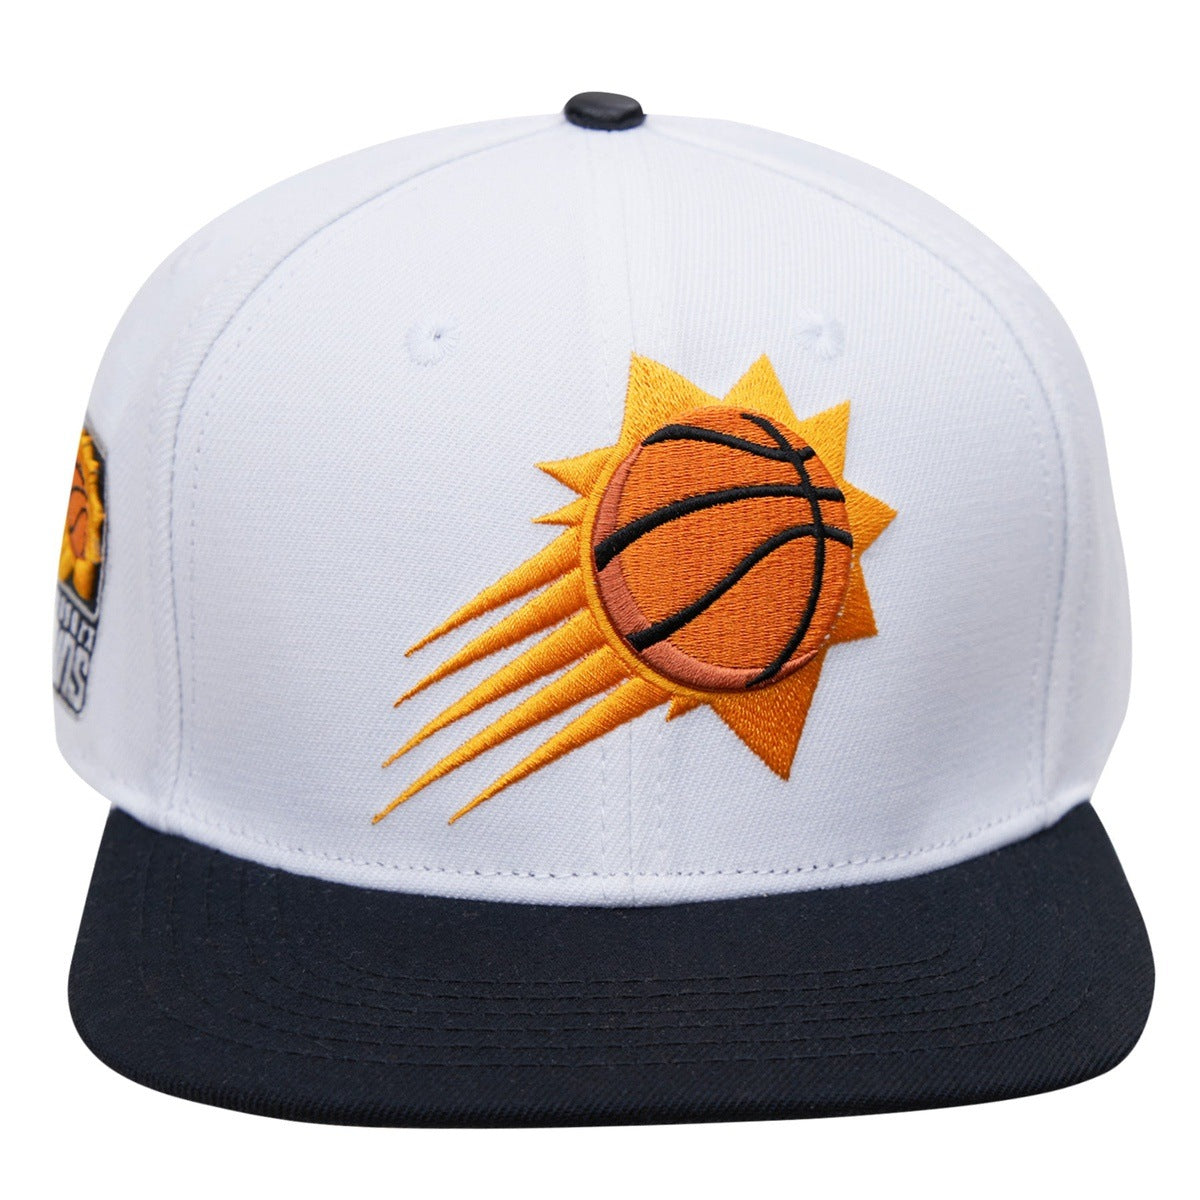 Phoenix Suns Hats, Mens Suns Caps, Beanie, Snapbacks